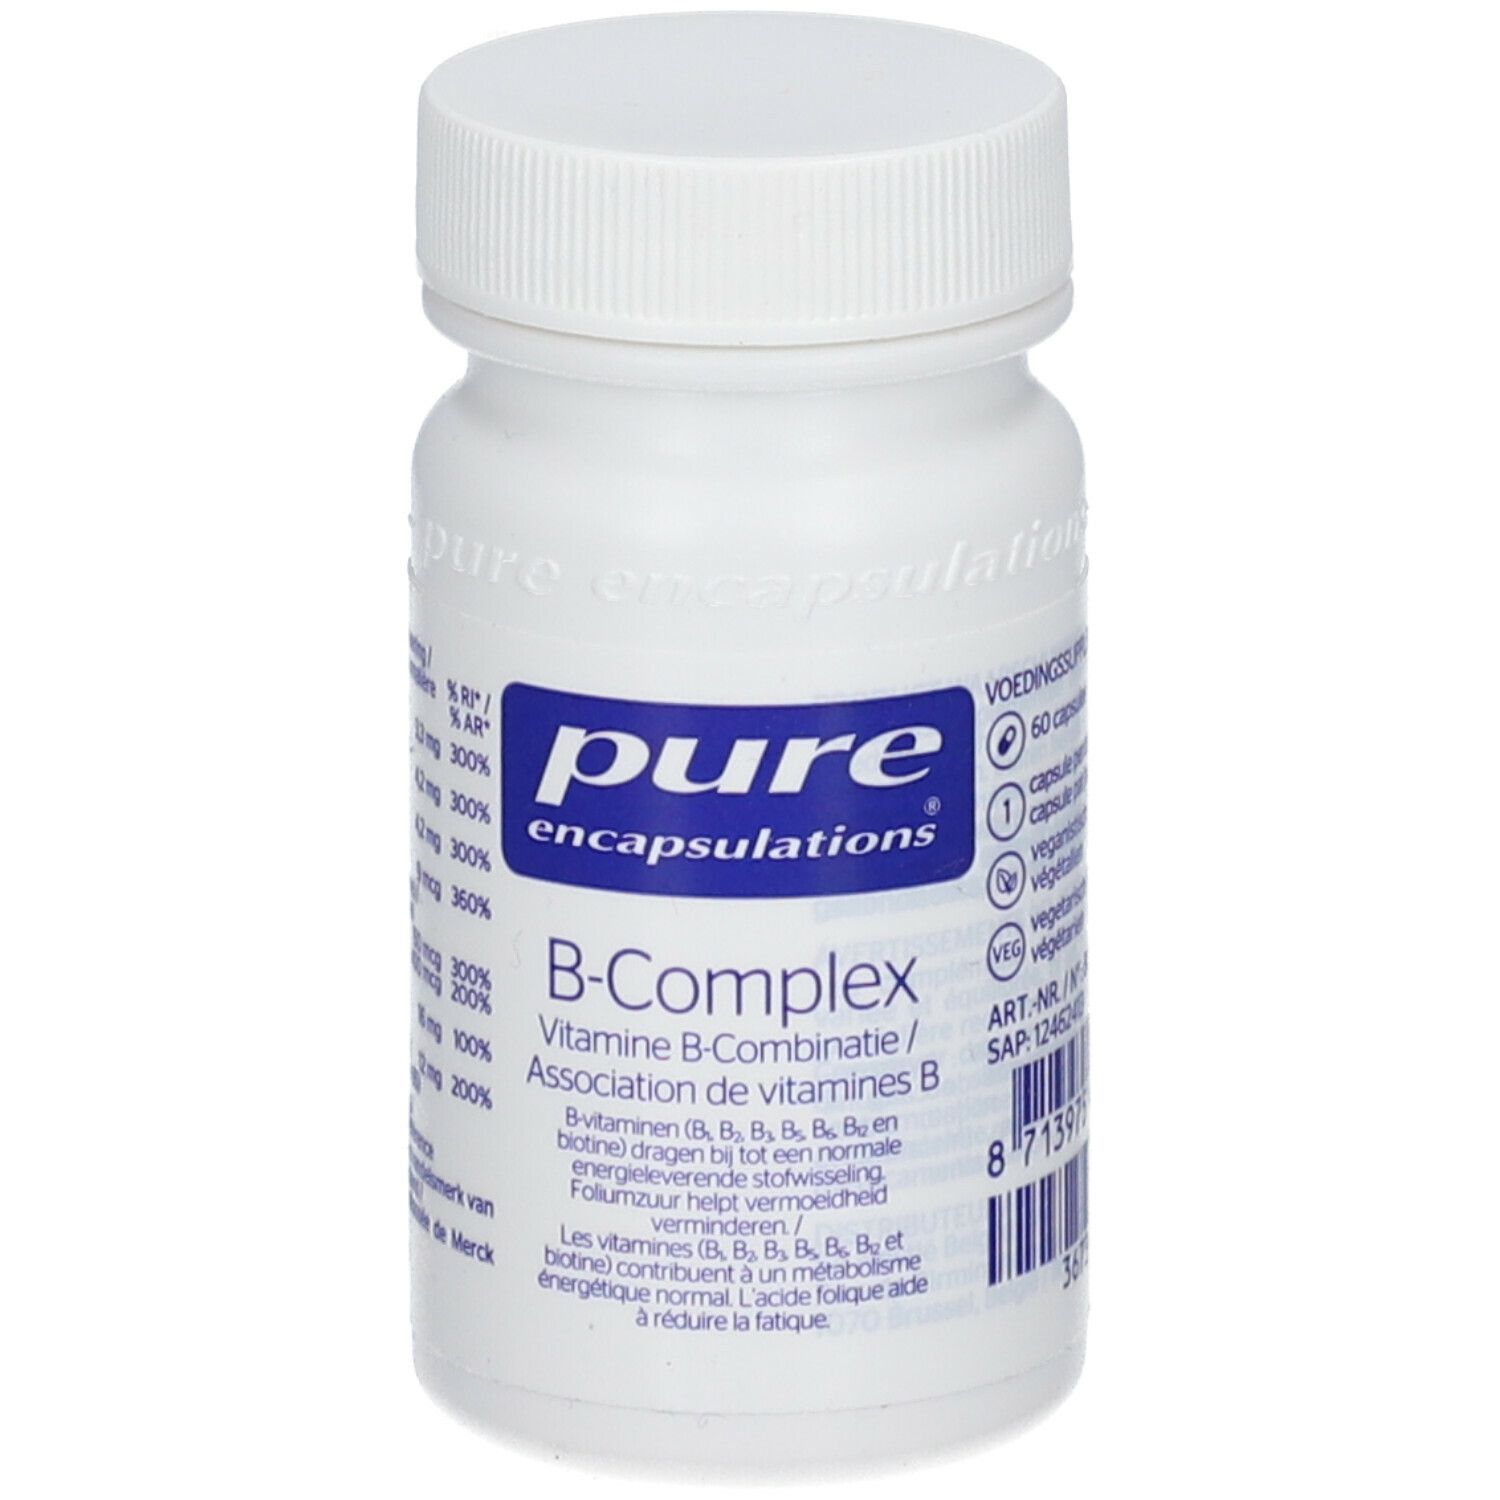 pure encapsulations® B-Complex